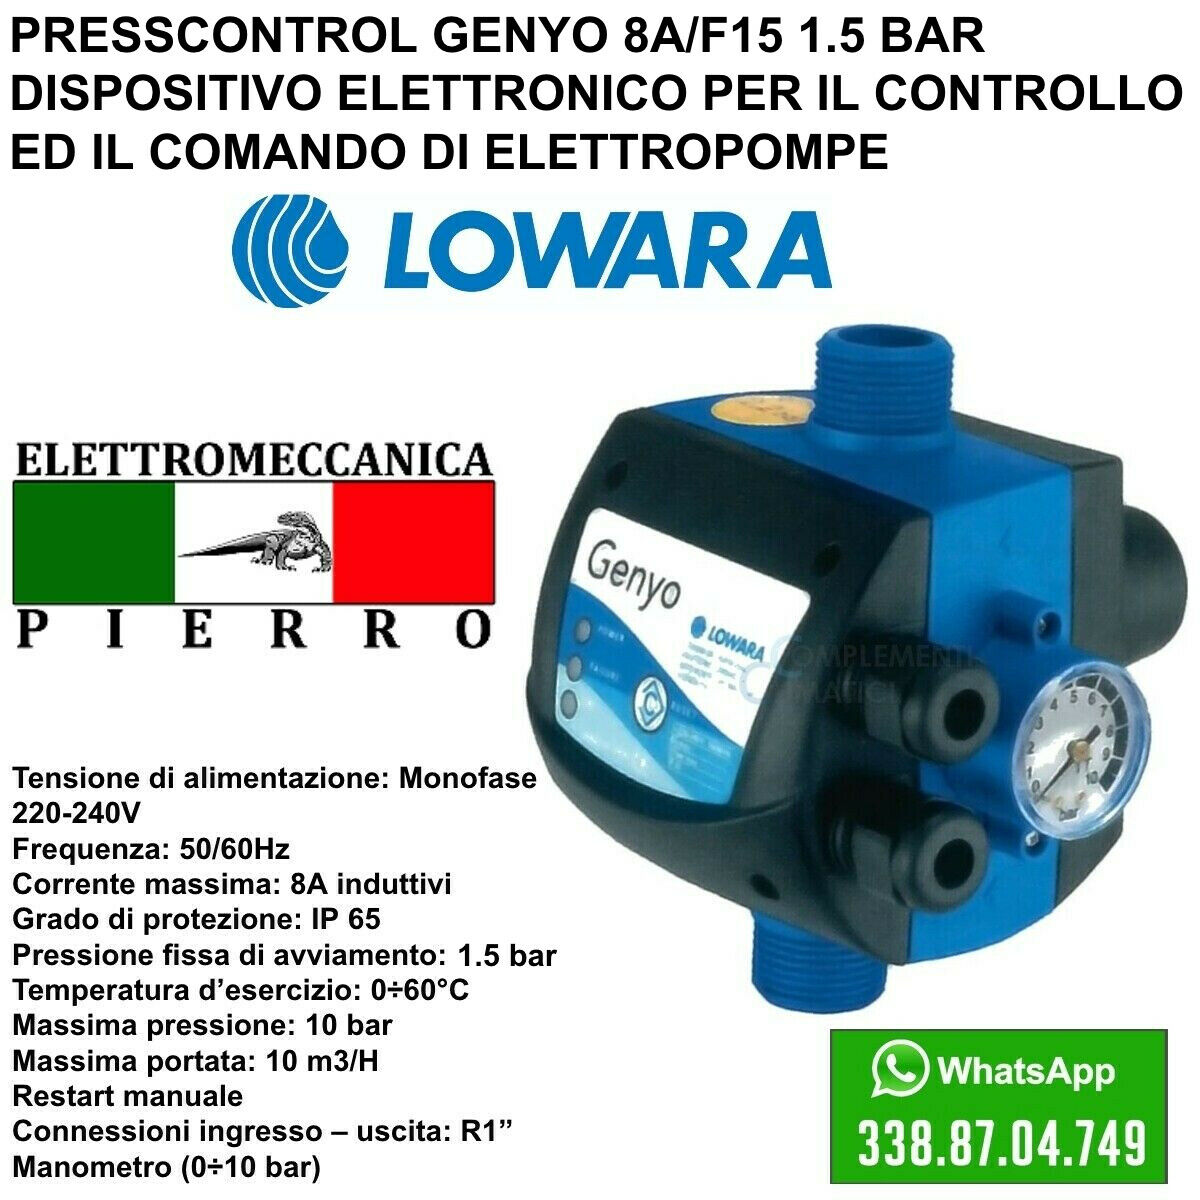 Presscontrol GENYO 8A/F15 LOWARA logo LOWARA Elettromeccanica Pierro Assistenza